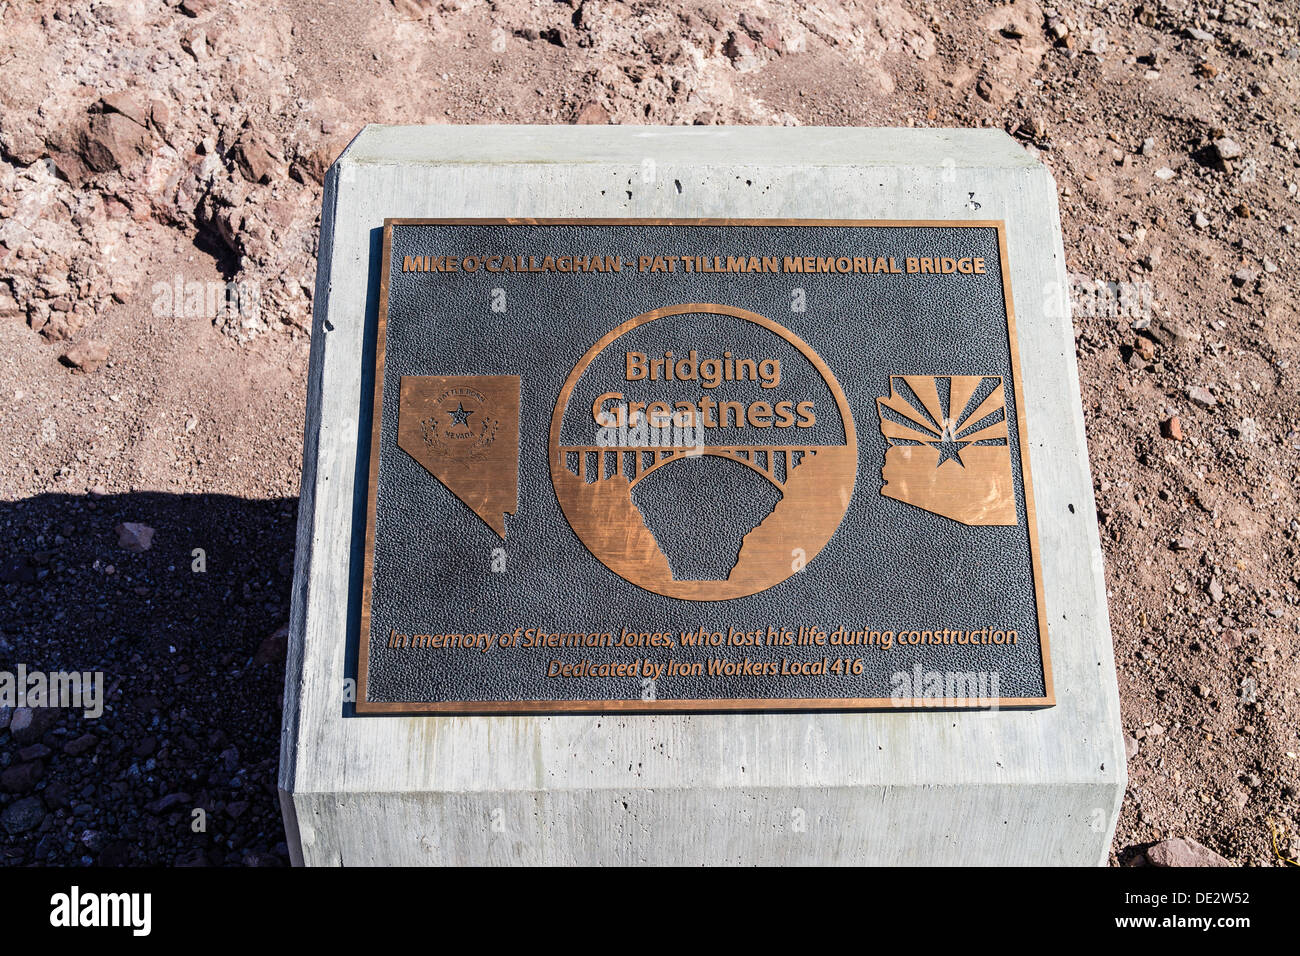 Eine Bronzetafel an Mike O'Callaghan - Pat Tillman Memorial Bridge am Hoover Dam Gedenktafel in Erinnerung an Sherman Jones gewidmet. Stockfoto